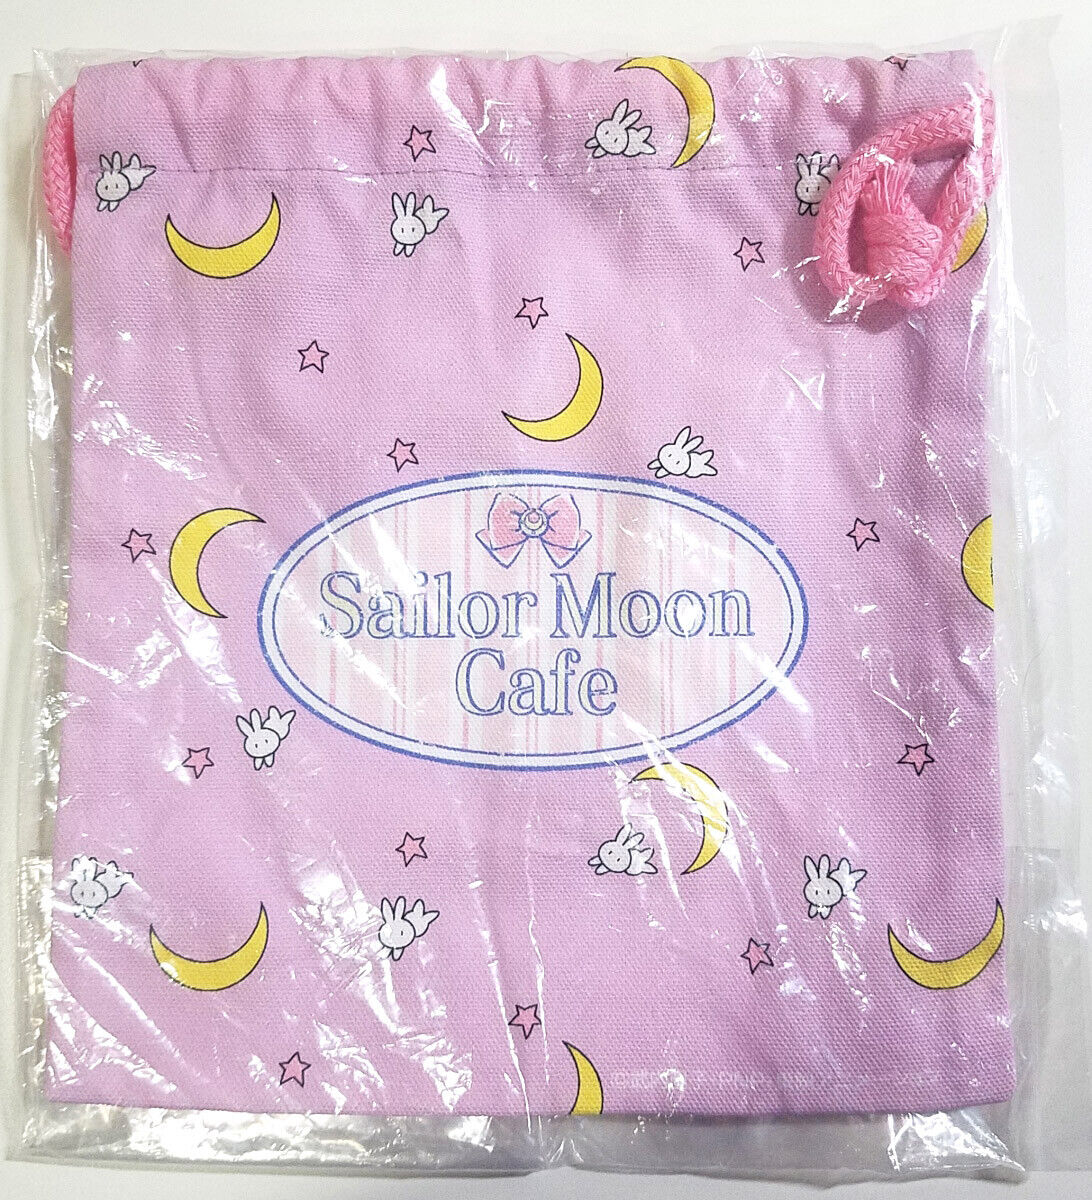 Sailor Moon Q-Pot Cafe 2017 - Mini Drawstring Bag - Purple Bunny Pattern CUTE